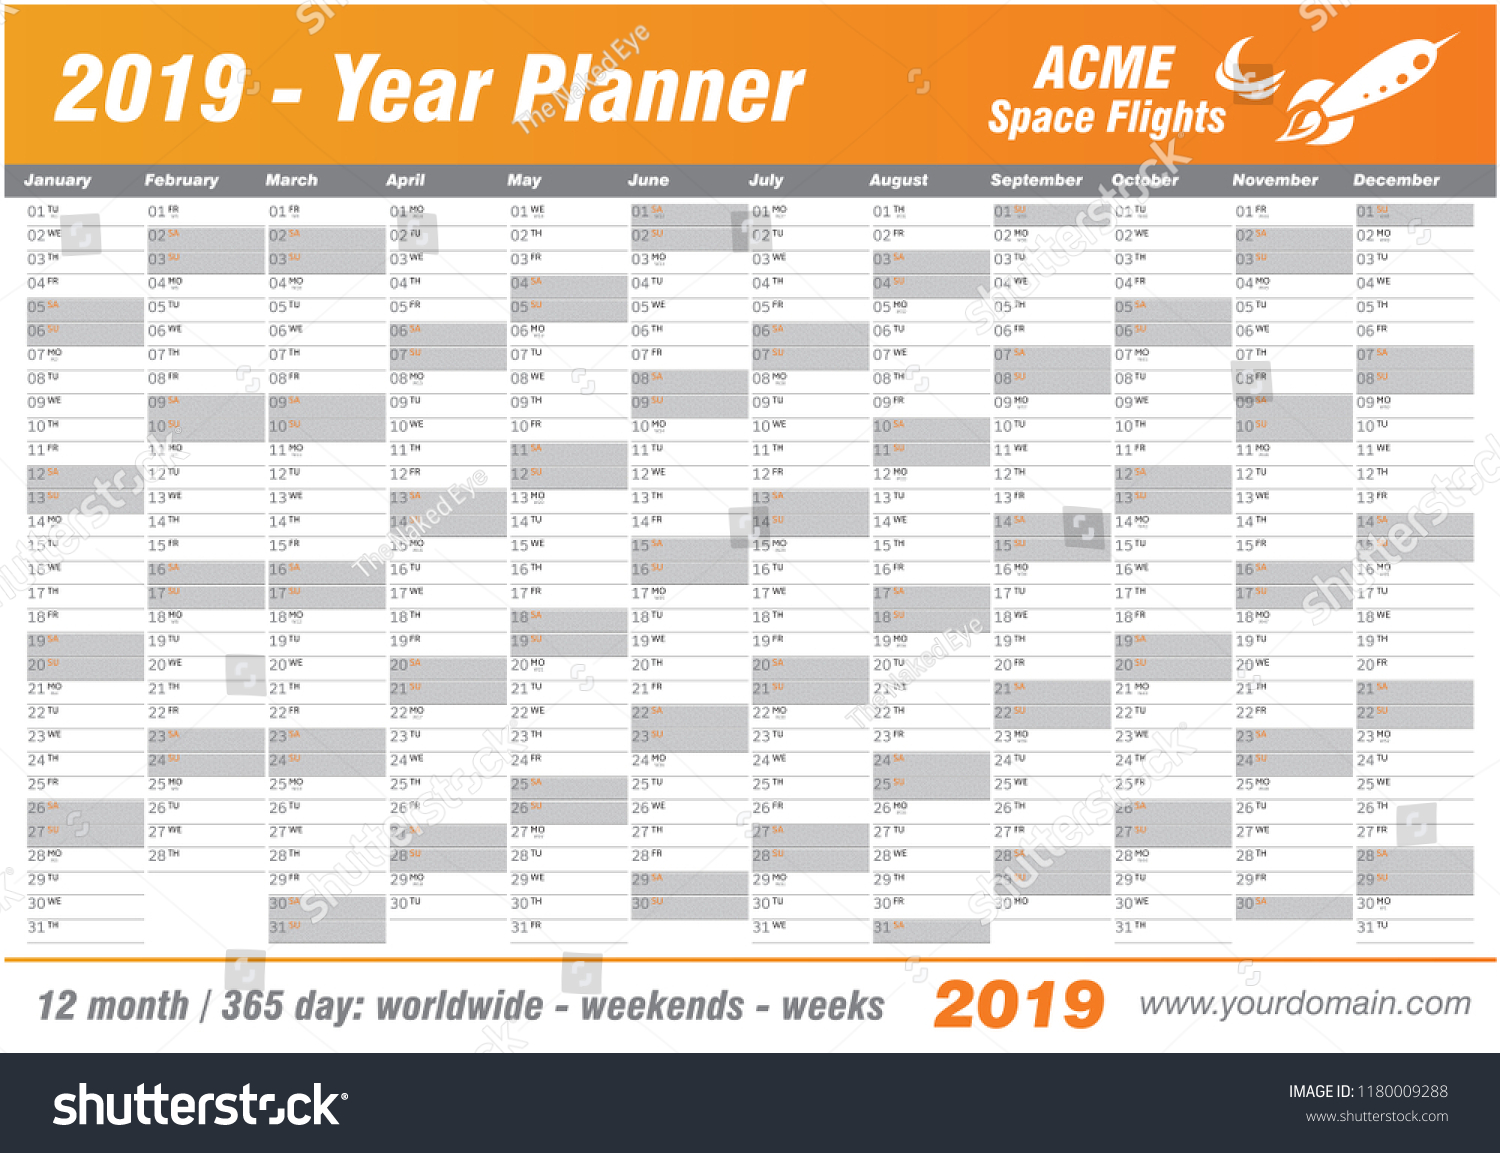 Year Planner Calendar 2019 Vector Annual Stock Vector Royalty Free 1180009288